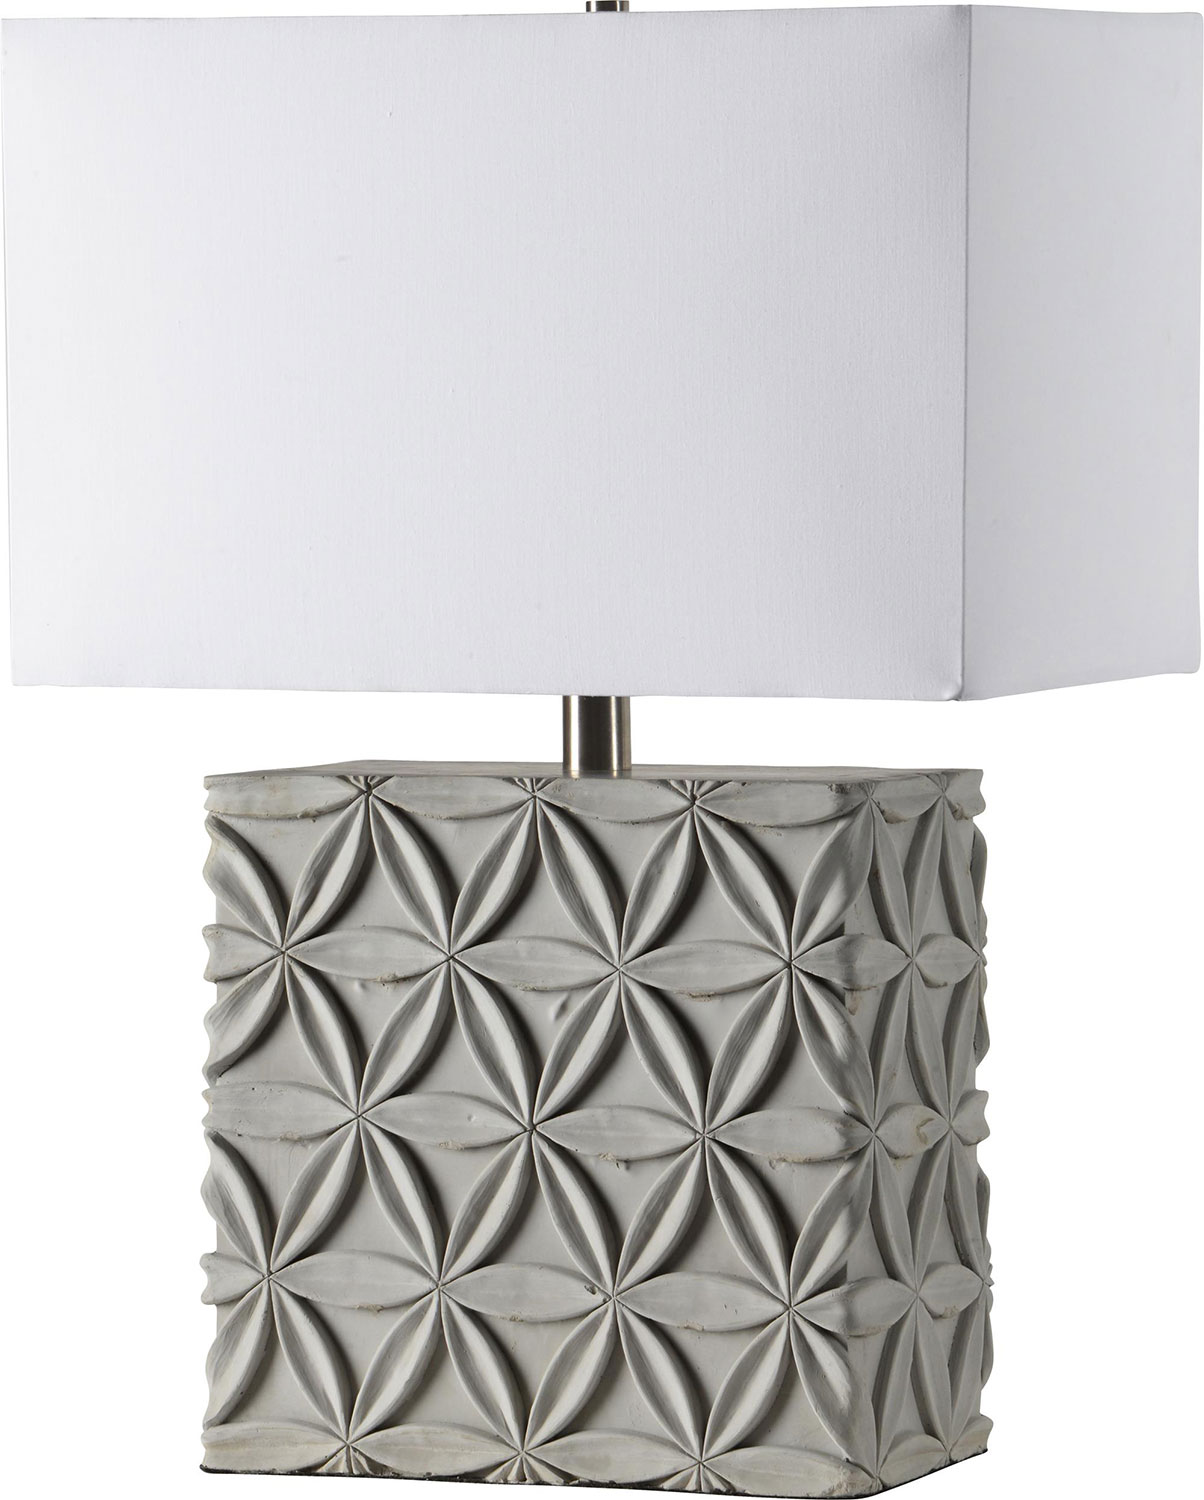 Ren-Wil Aristotle's Lantern Table Lamp - Light grey